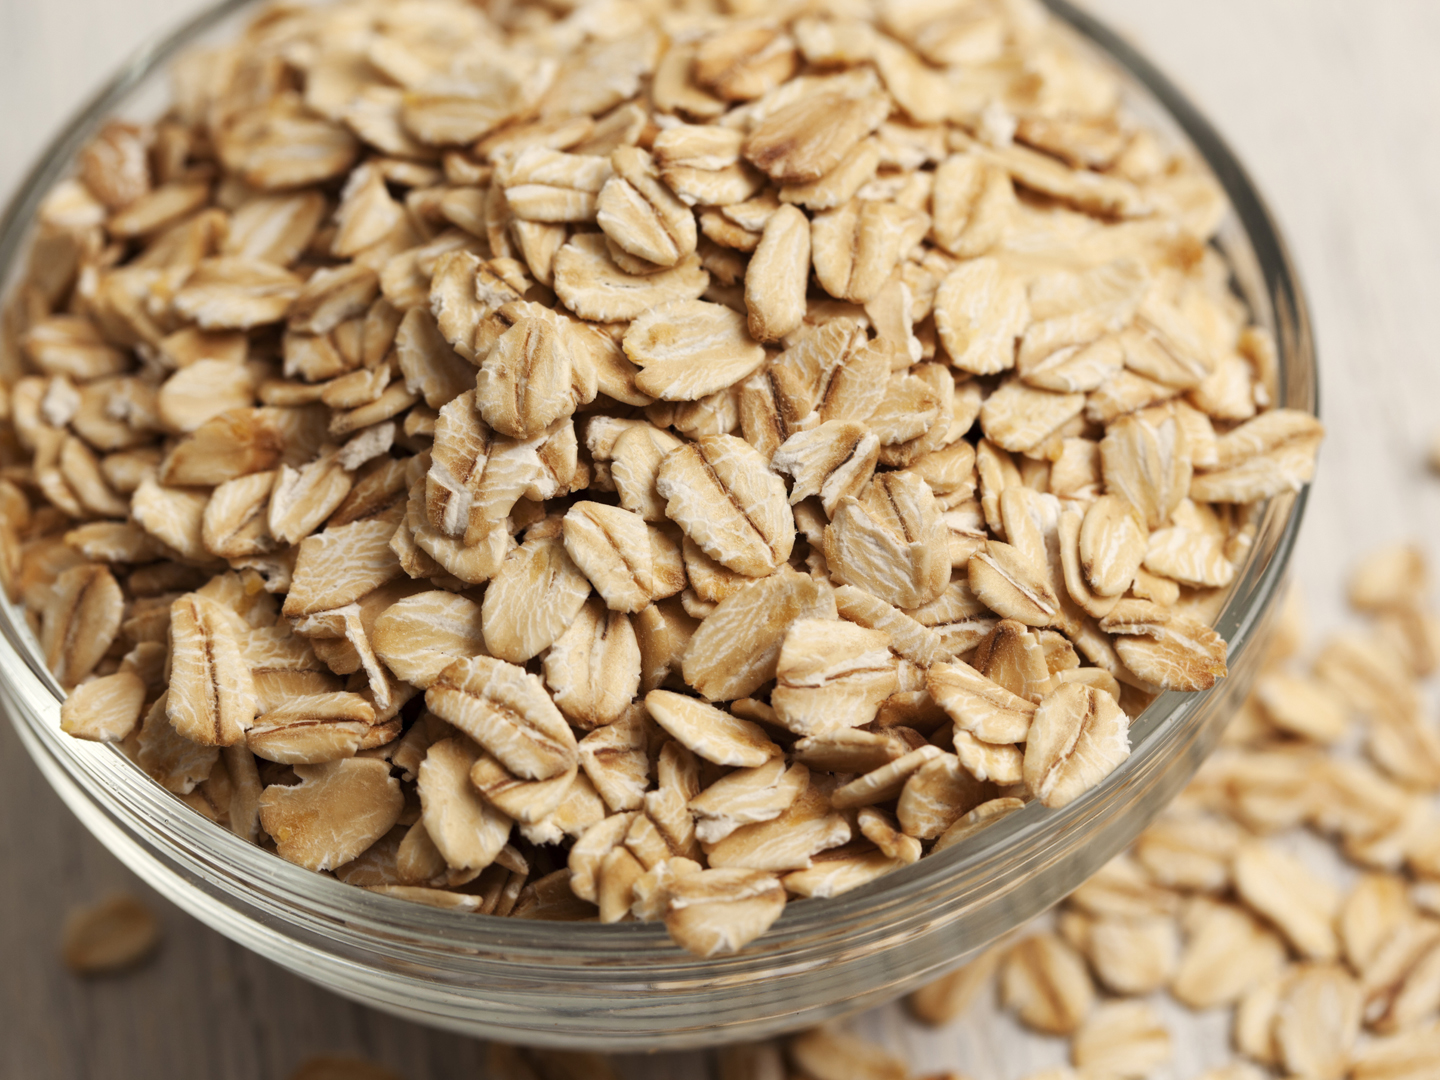 My City - Health benefits of oats